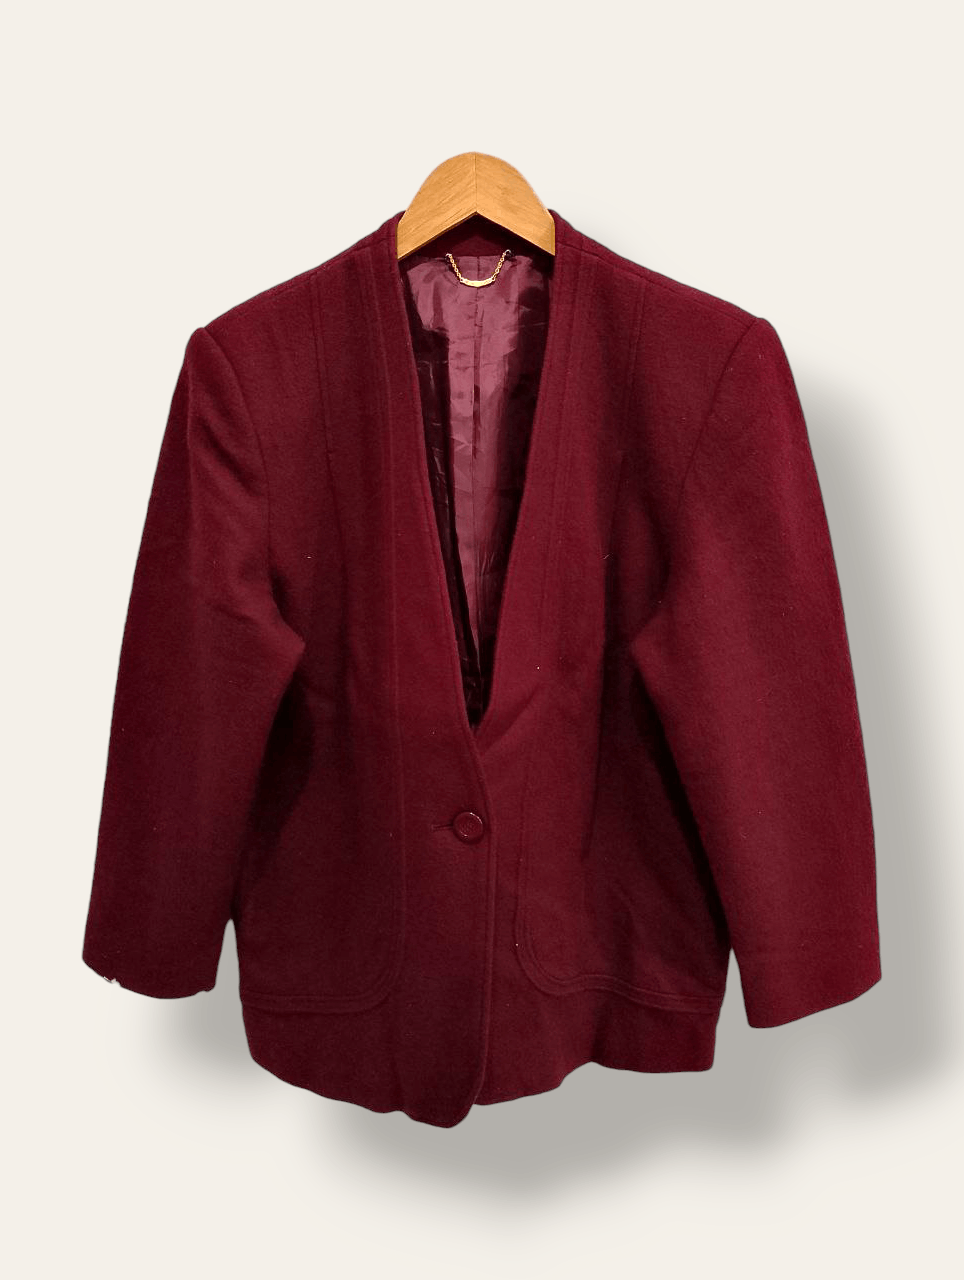 Archival Clothing - ELEGANT Red Wool Made in Japan Suit Coat Blazer - 1